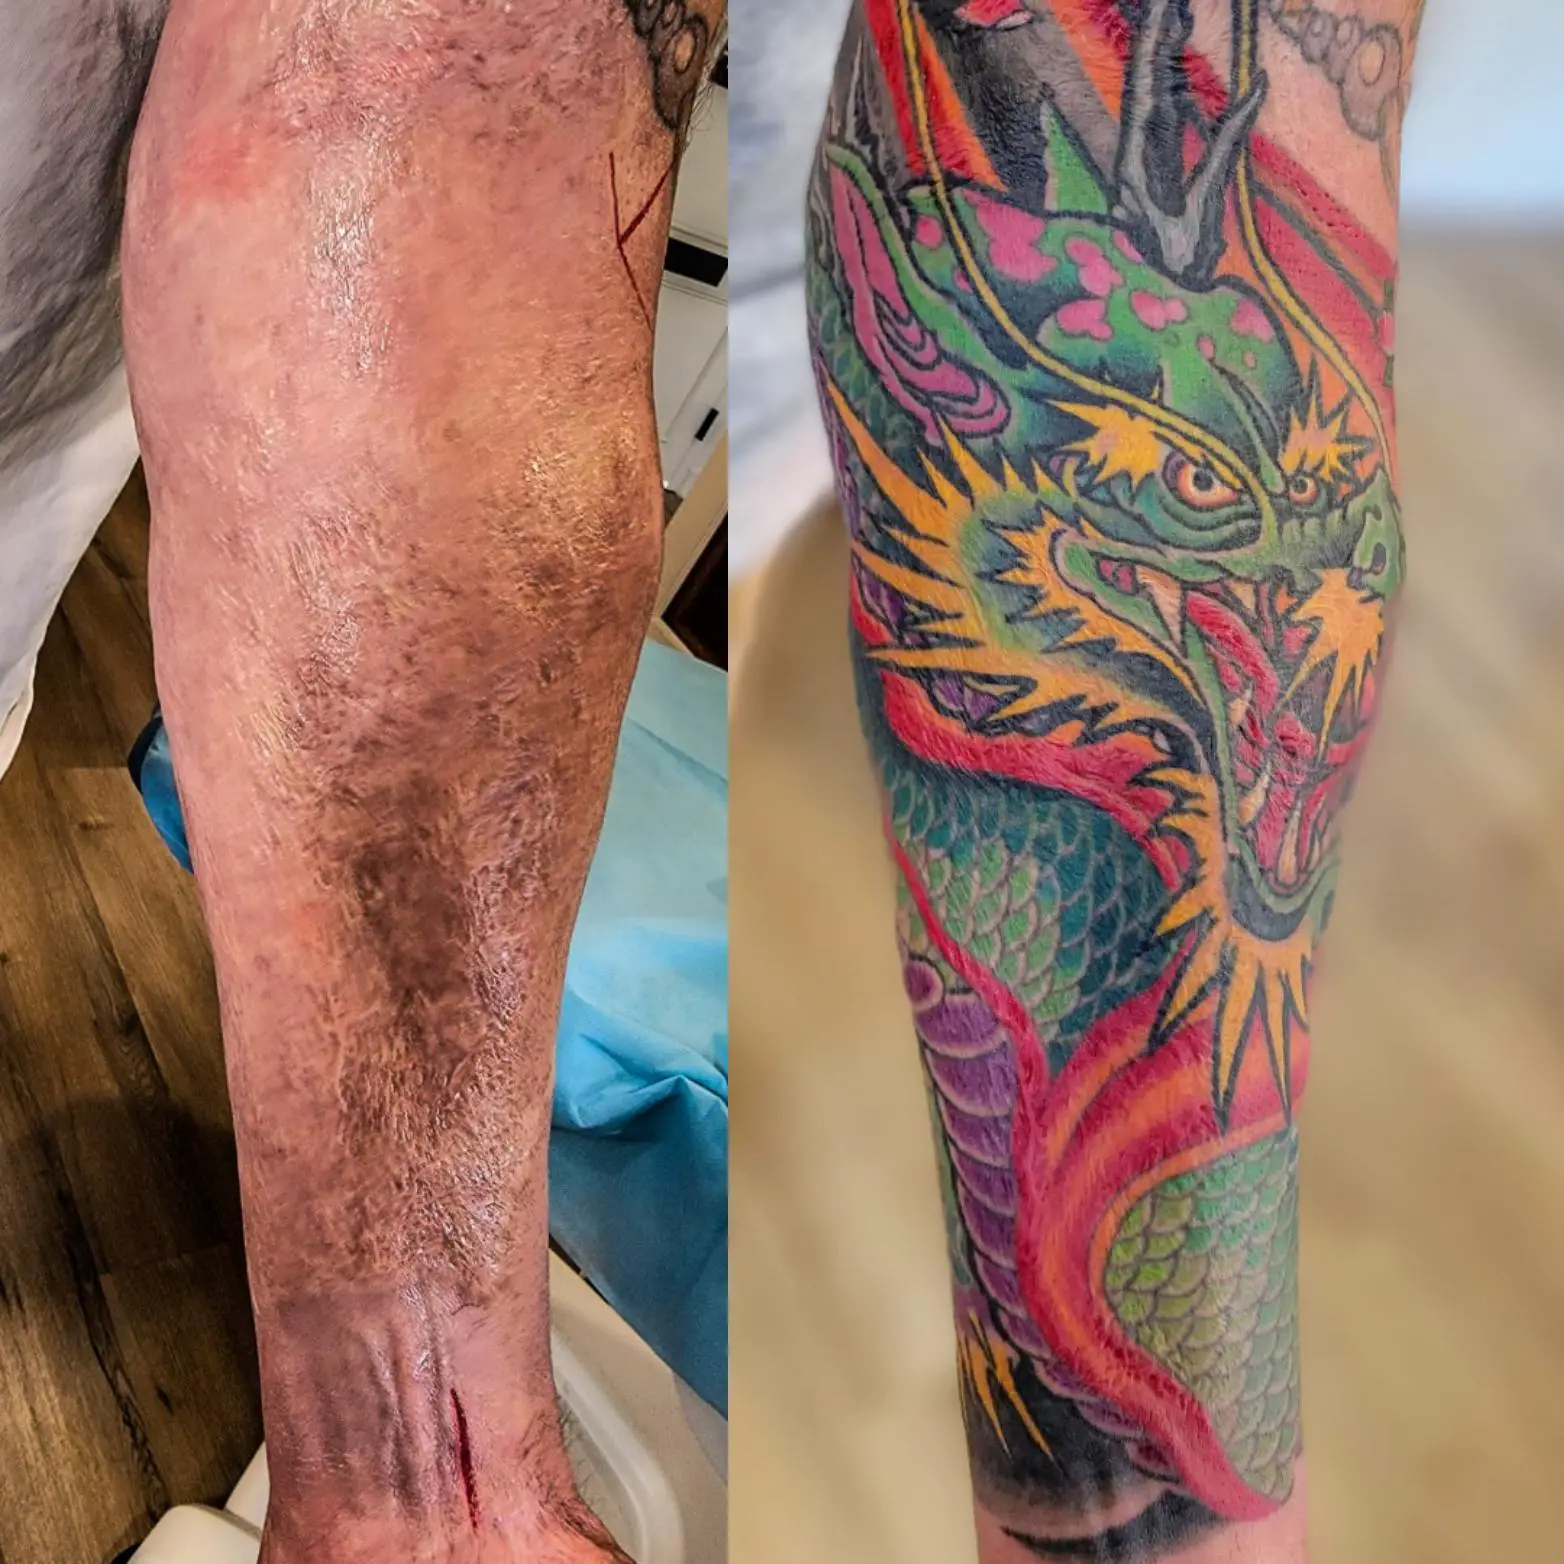 I Have A Burn Scar - Can I Get A Tattoo Over It? - Tattify